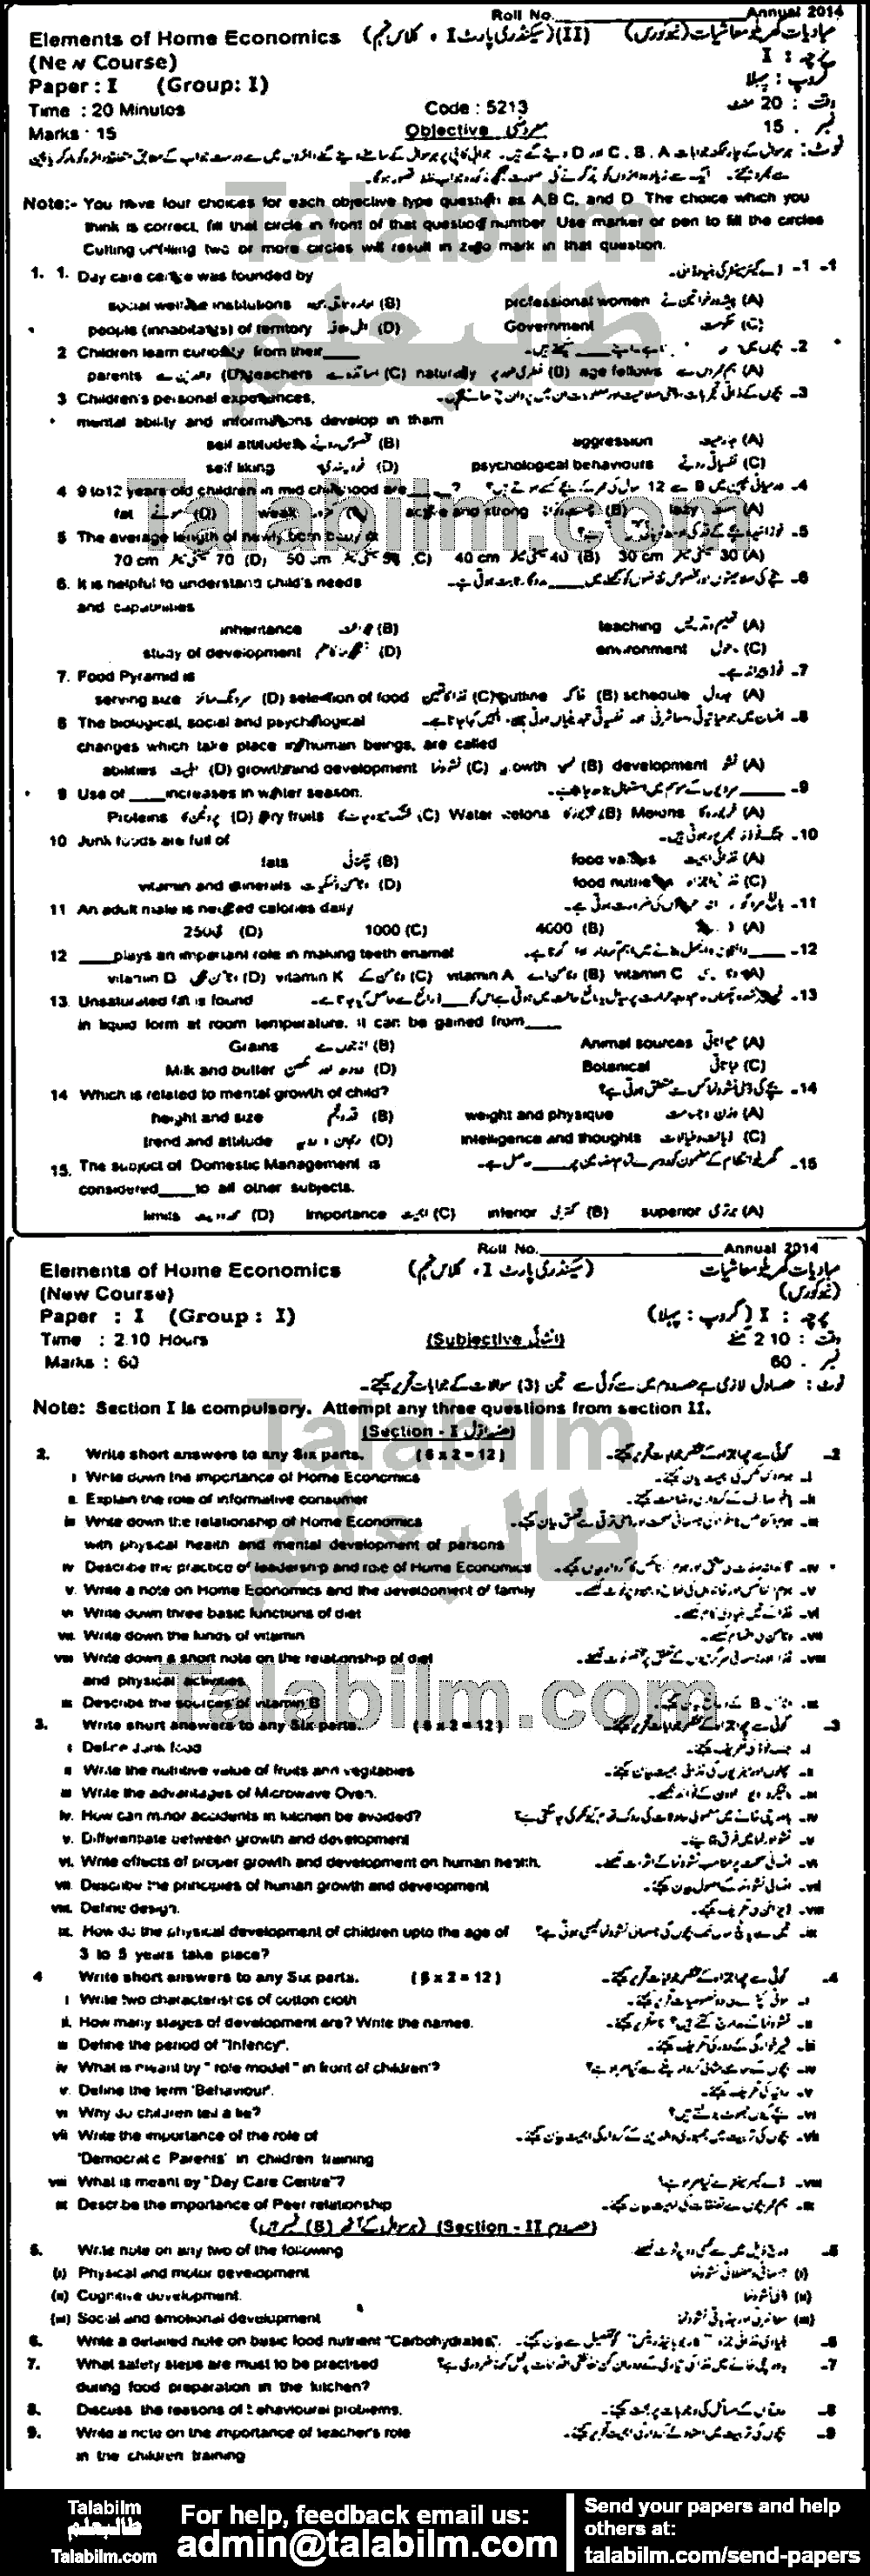 Home Economics 0 past paper for Urdu Medium 2014 Group-I